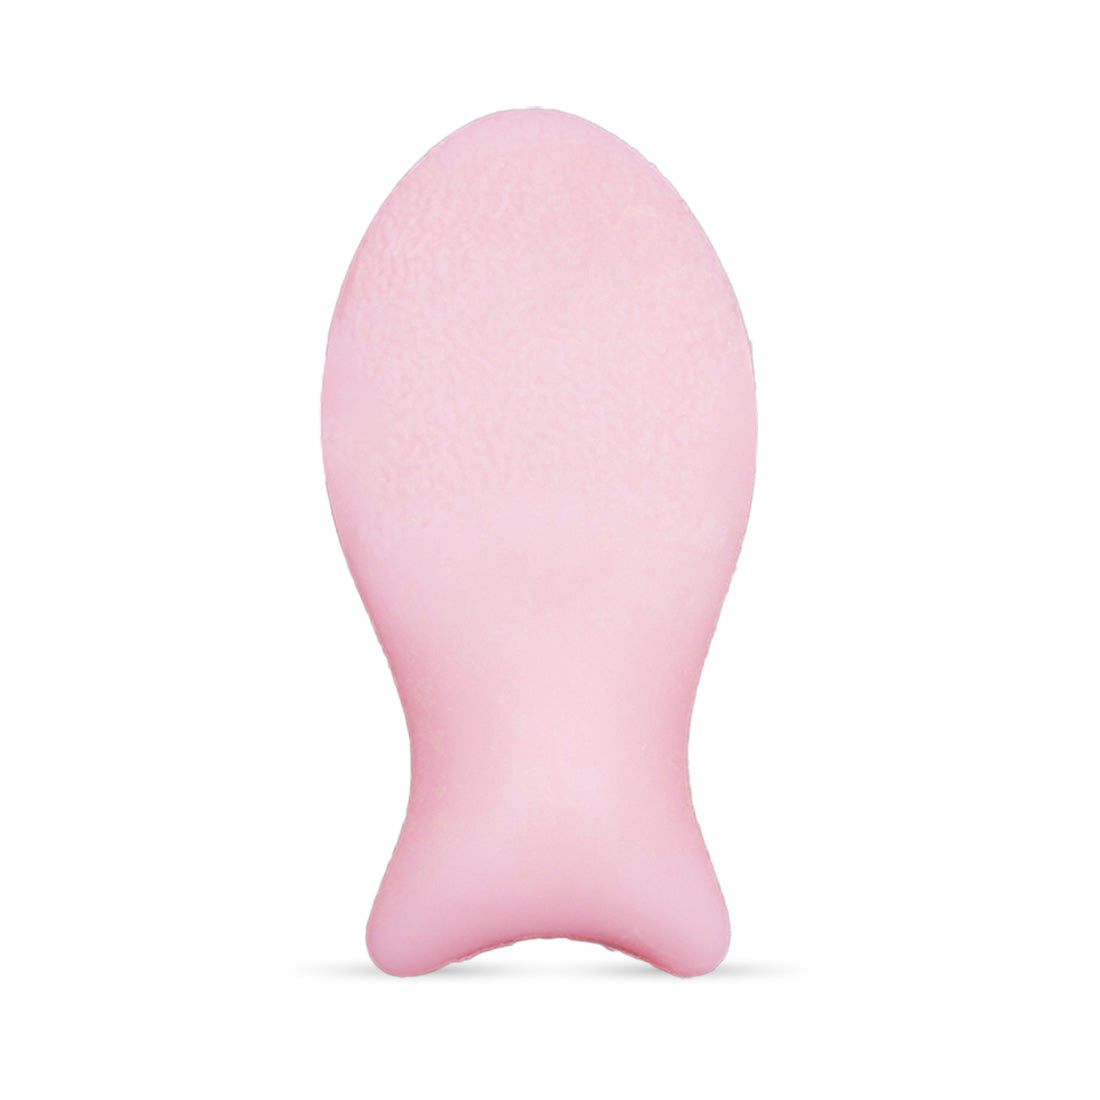 Makeup Blender Sponge Silicon For Women (Pink)- Face Powder & Liquid Foundation Puff Blending Sponge for Face & Neck Makeup